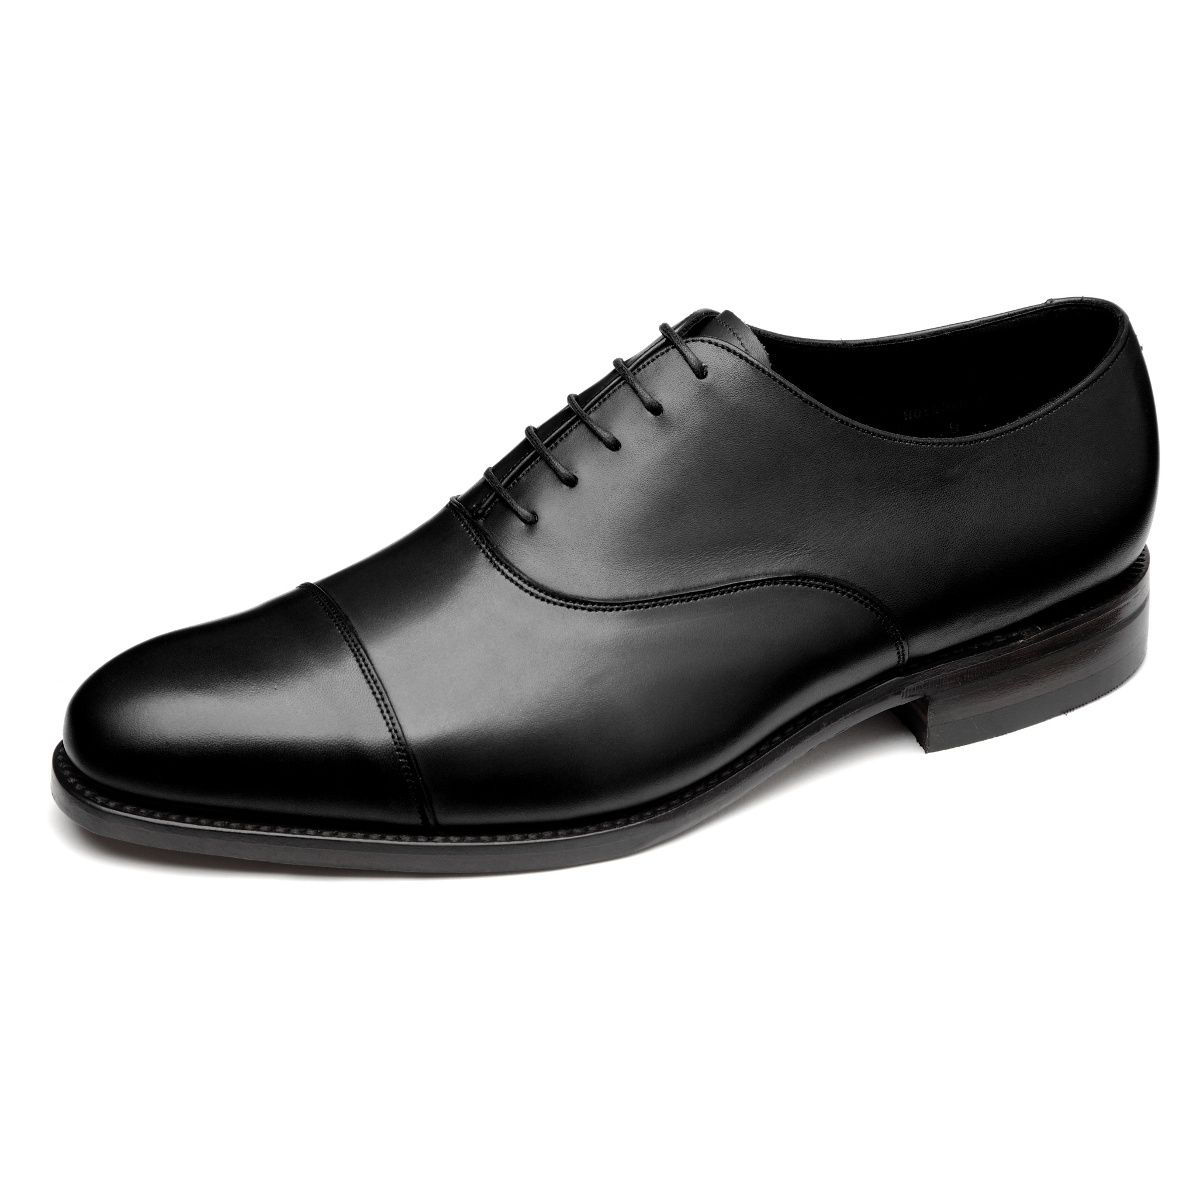 Loake Holborn Black - Pediwear Footwear